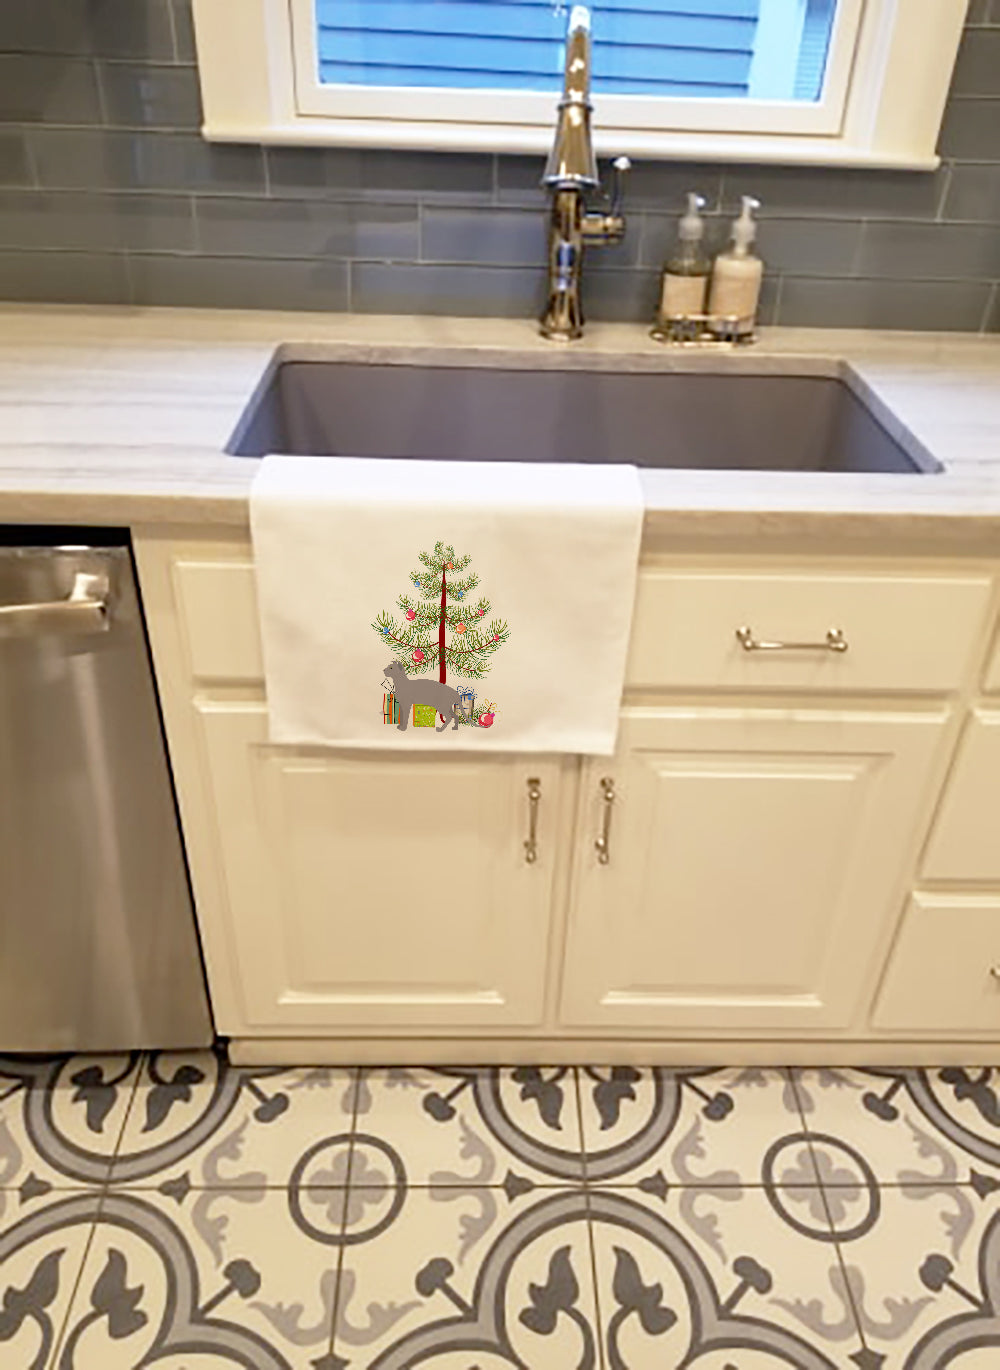 Buy this Ukrainian Levkoy #2 Cat Merry Christmas White Kitchen Towel Set of 2